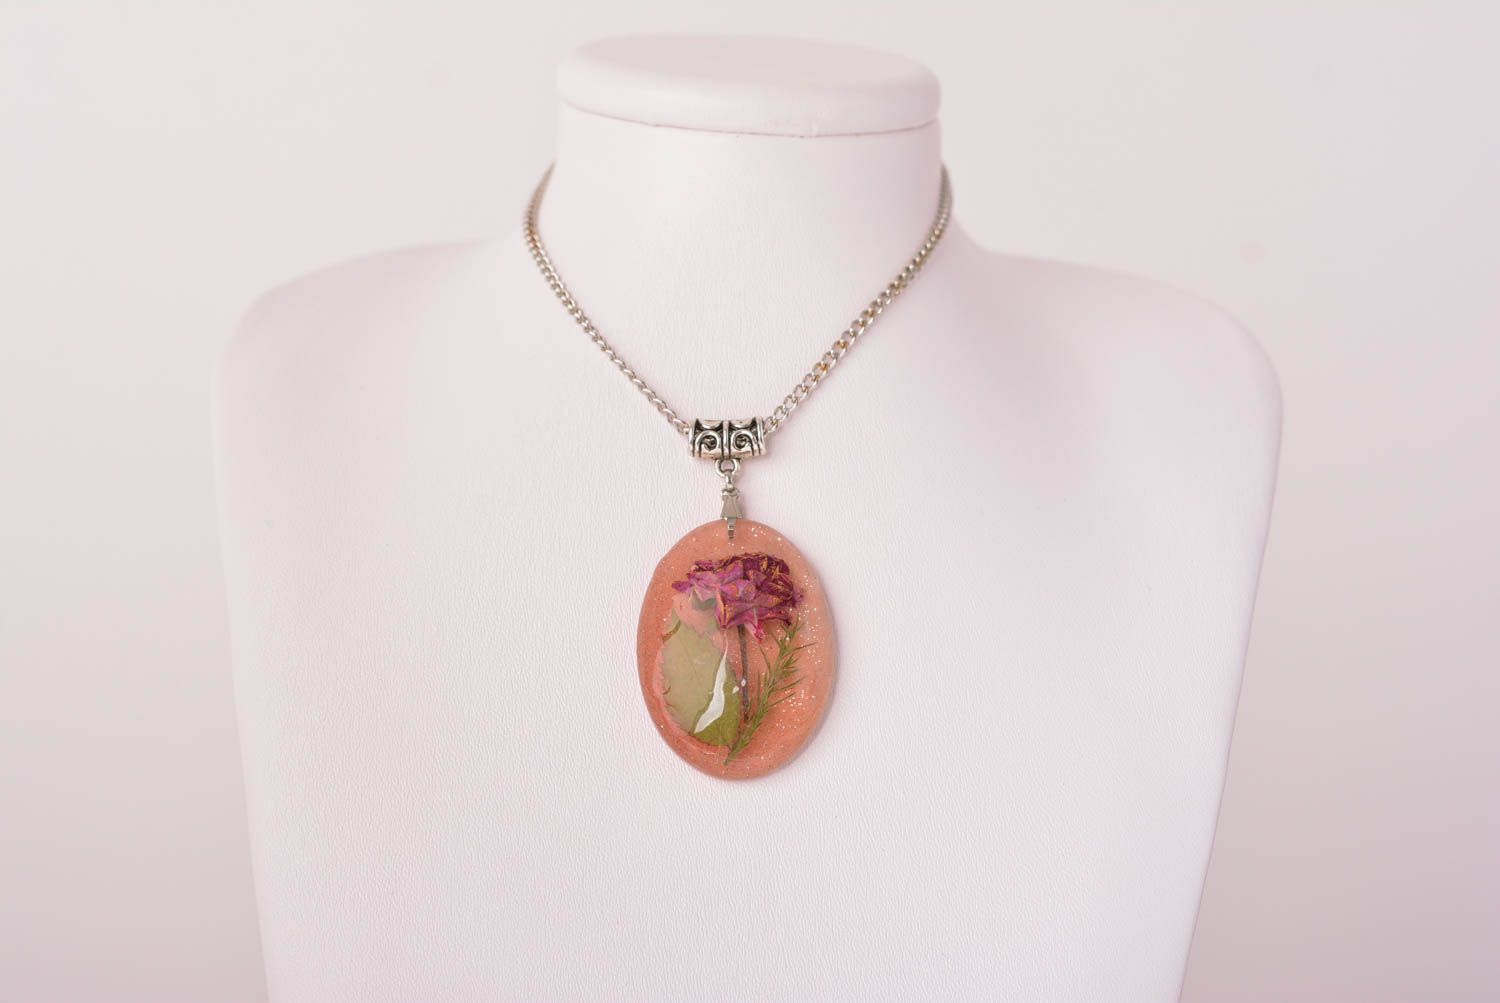 Handmade pendant unusual pendant for women epoxy resin jewelry gift ideas photo 3